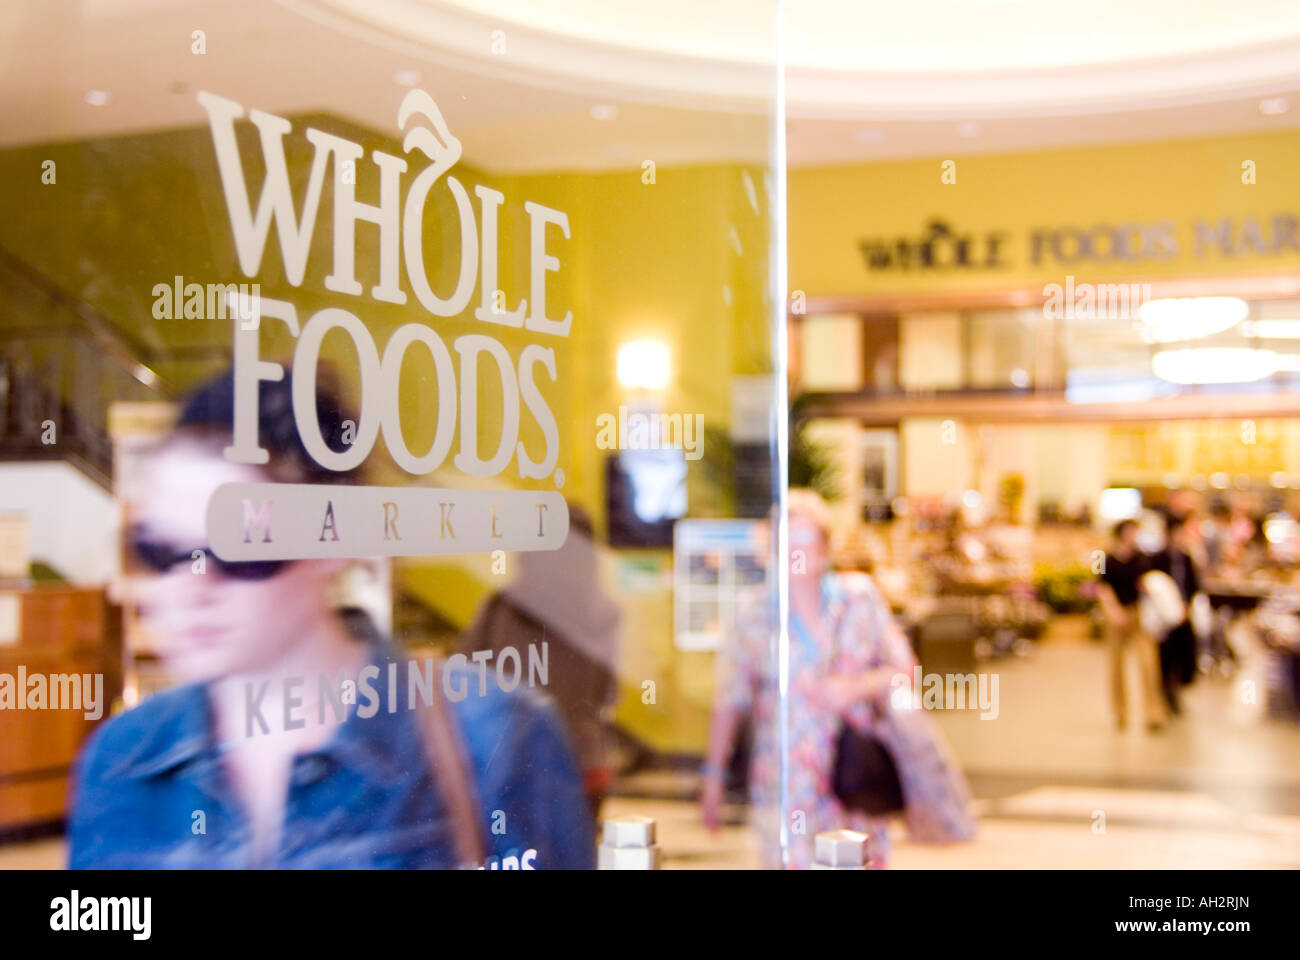 Whole Foods Market store, Londres, Angleterre, Royaume-Uni Banque D'Images